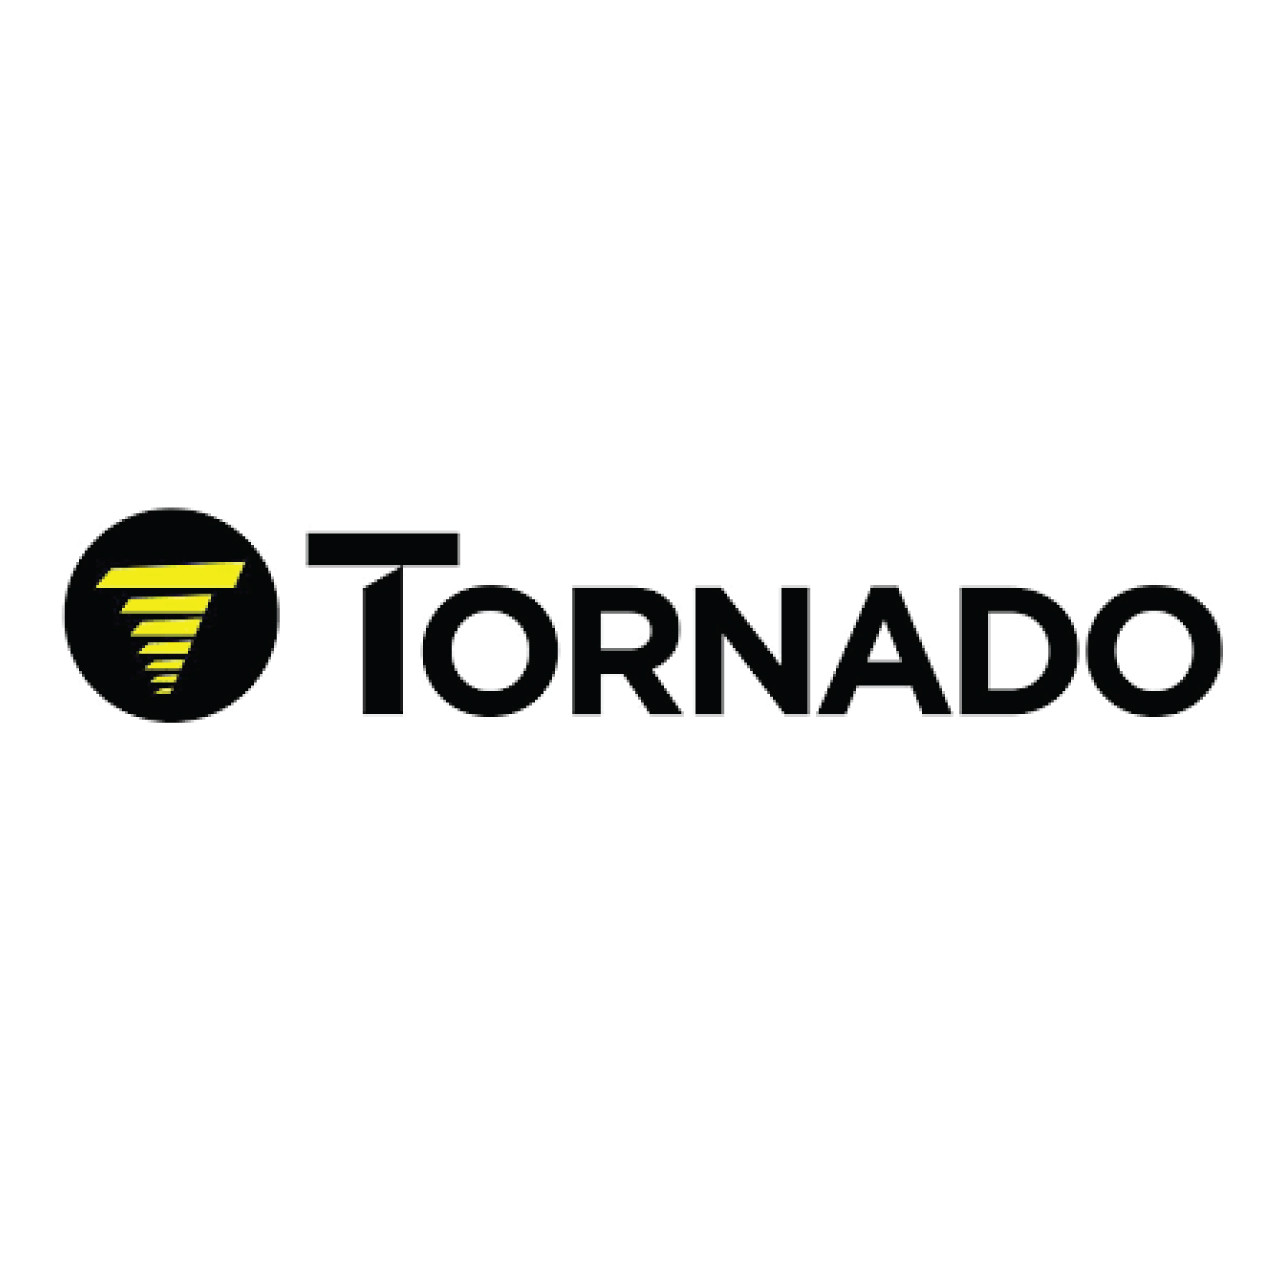 90-0581-0000, Tornado 90-0581-0000, Tornado BLDC MOTOR, Tornado parts